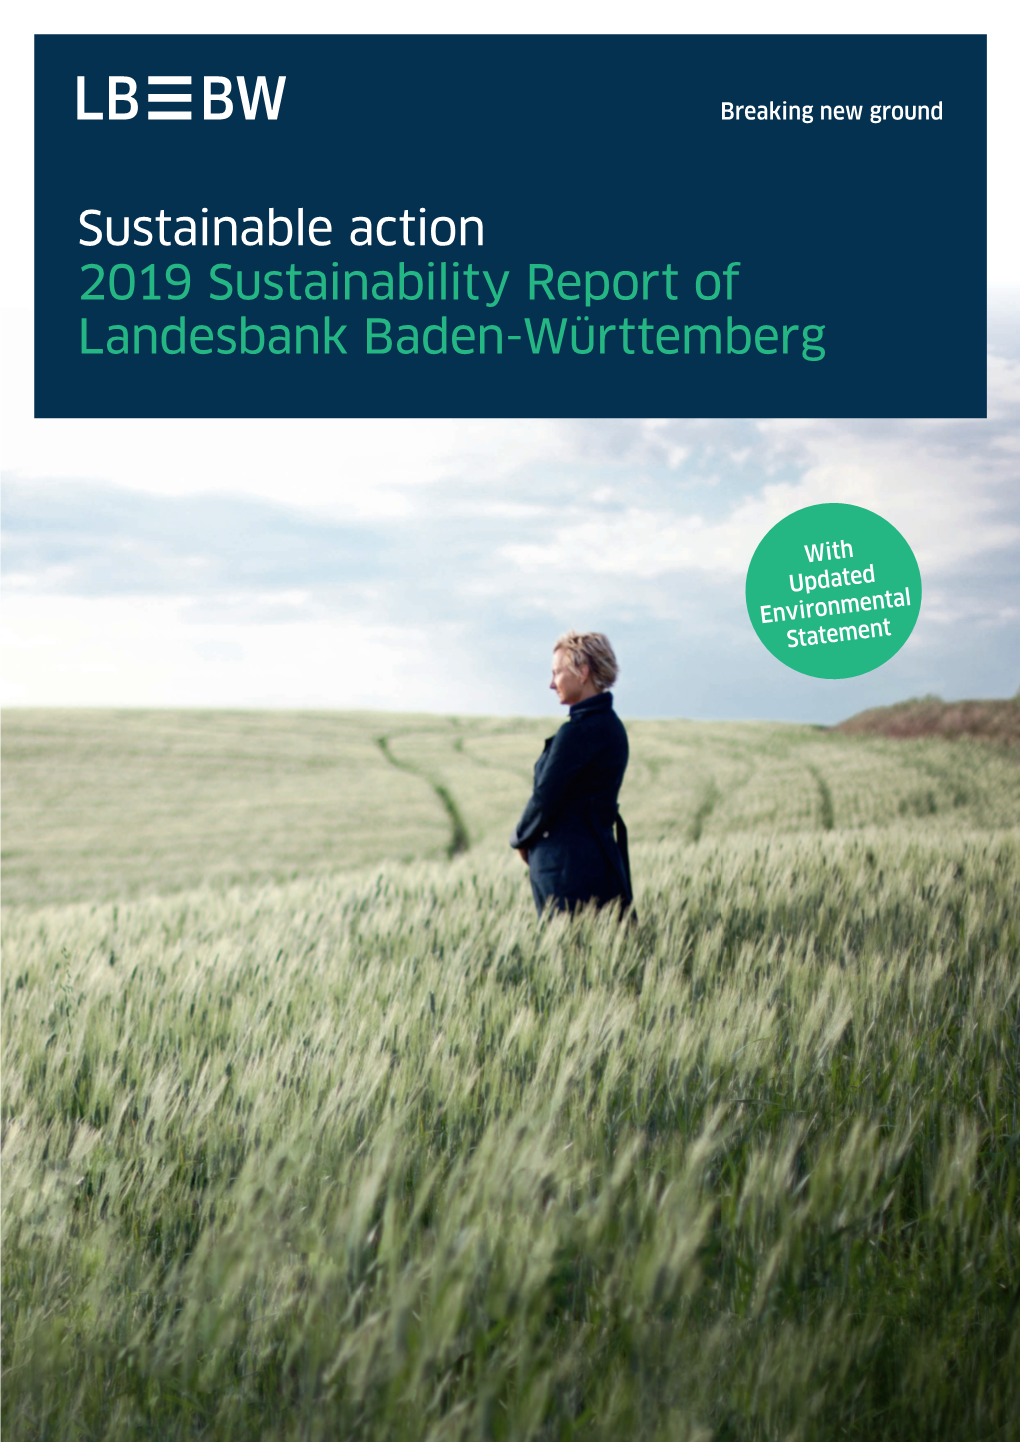 2019 Sustainability Report of Landesbank Badenwürttemberg